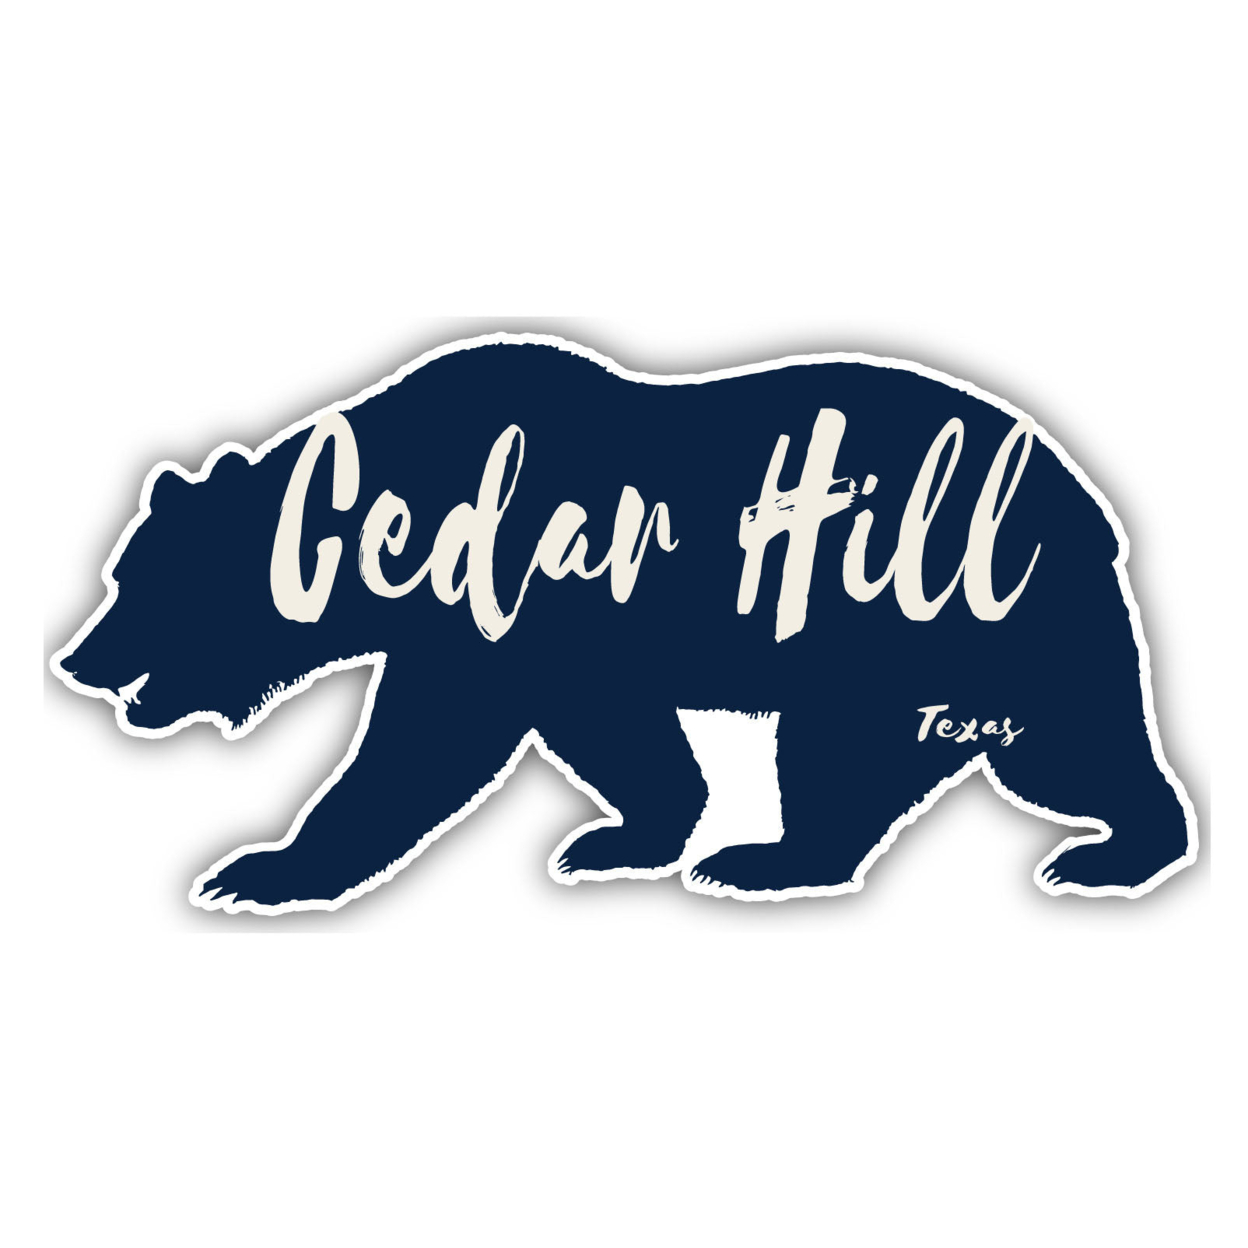 Cedar Hill Texas Souvenir Decorative Stickers (Choose Theme And Size) - 4-Pack, 4-Inch, Bear